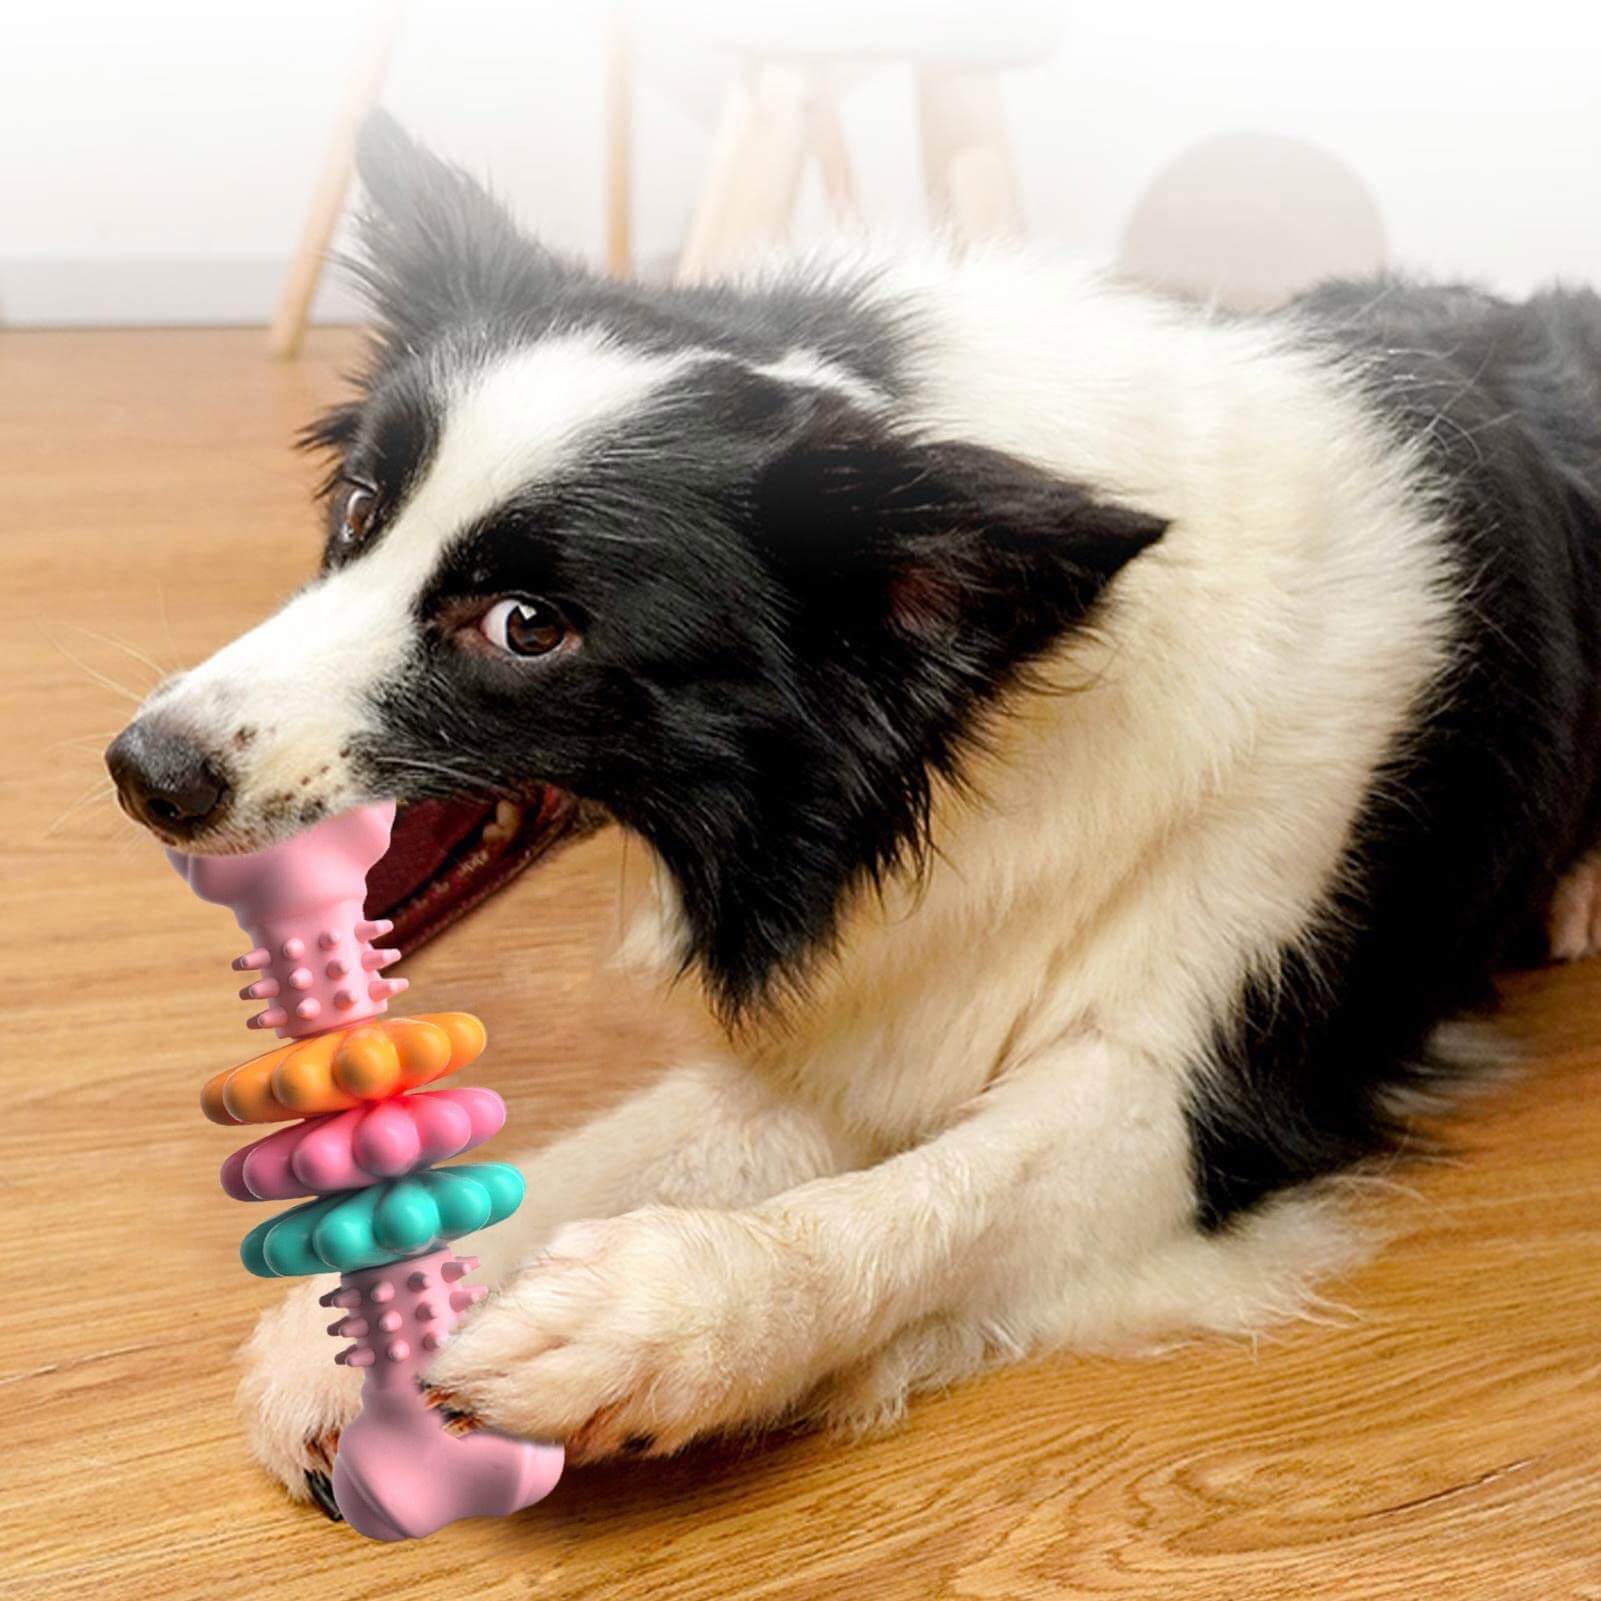 Dog Teeth Cleaning Toy - Dog